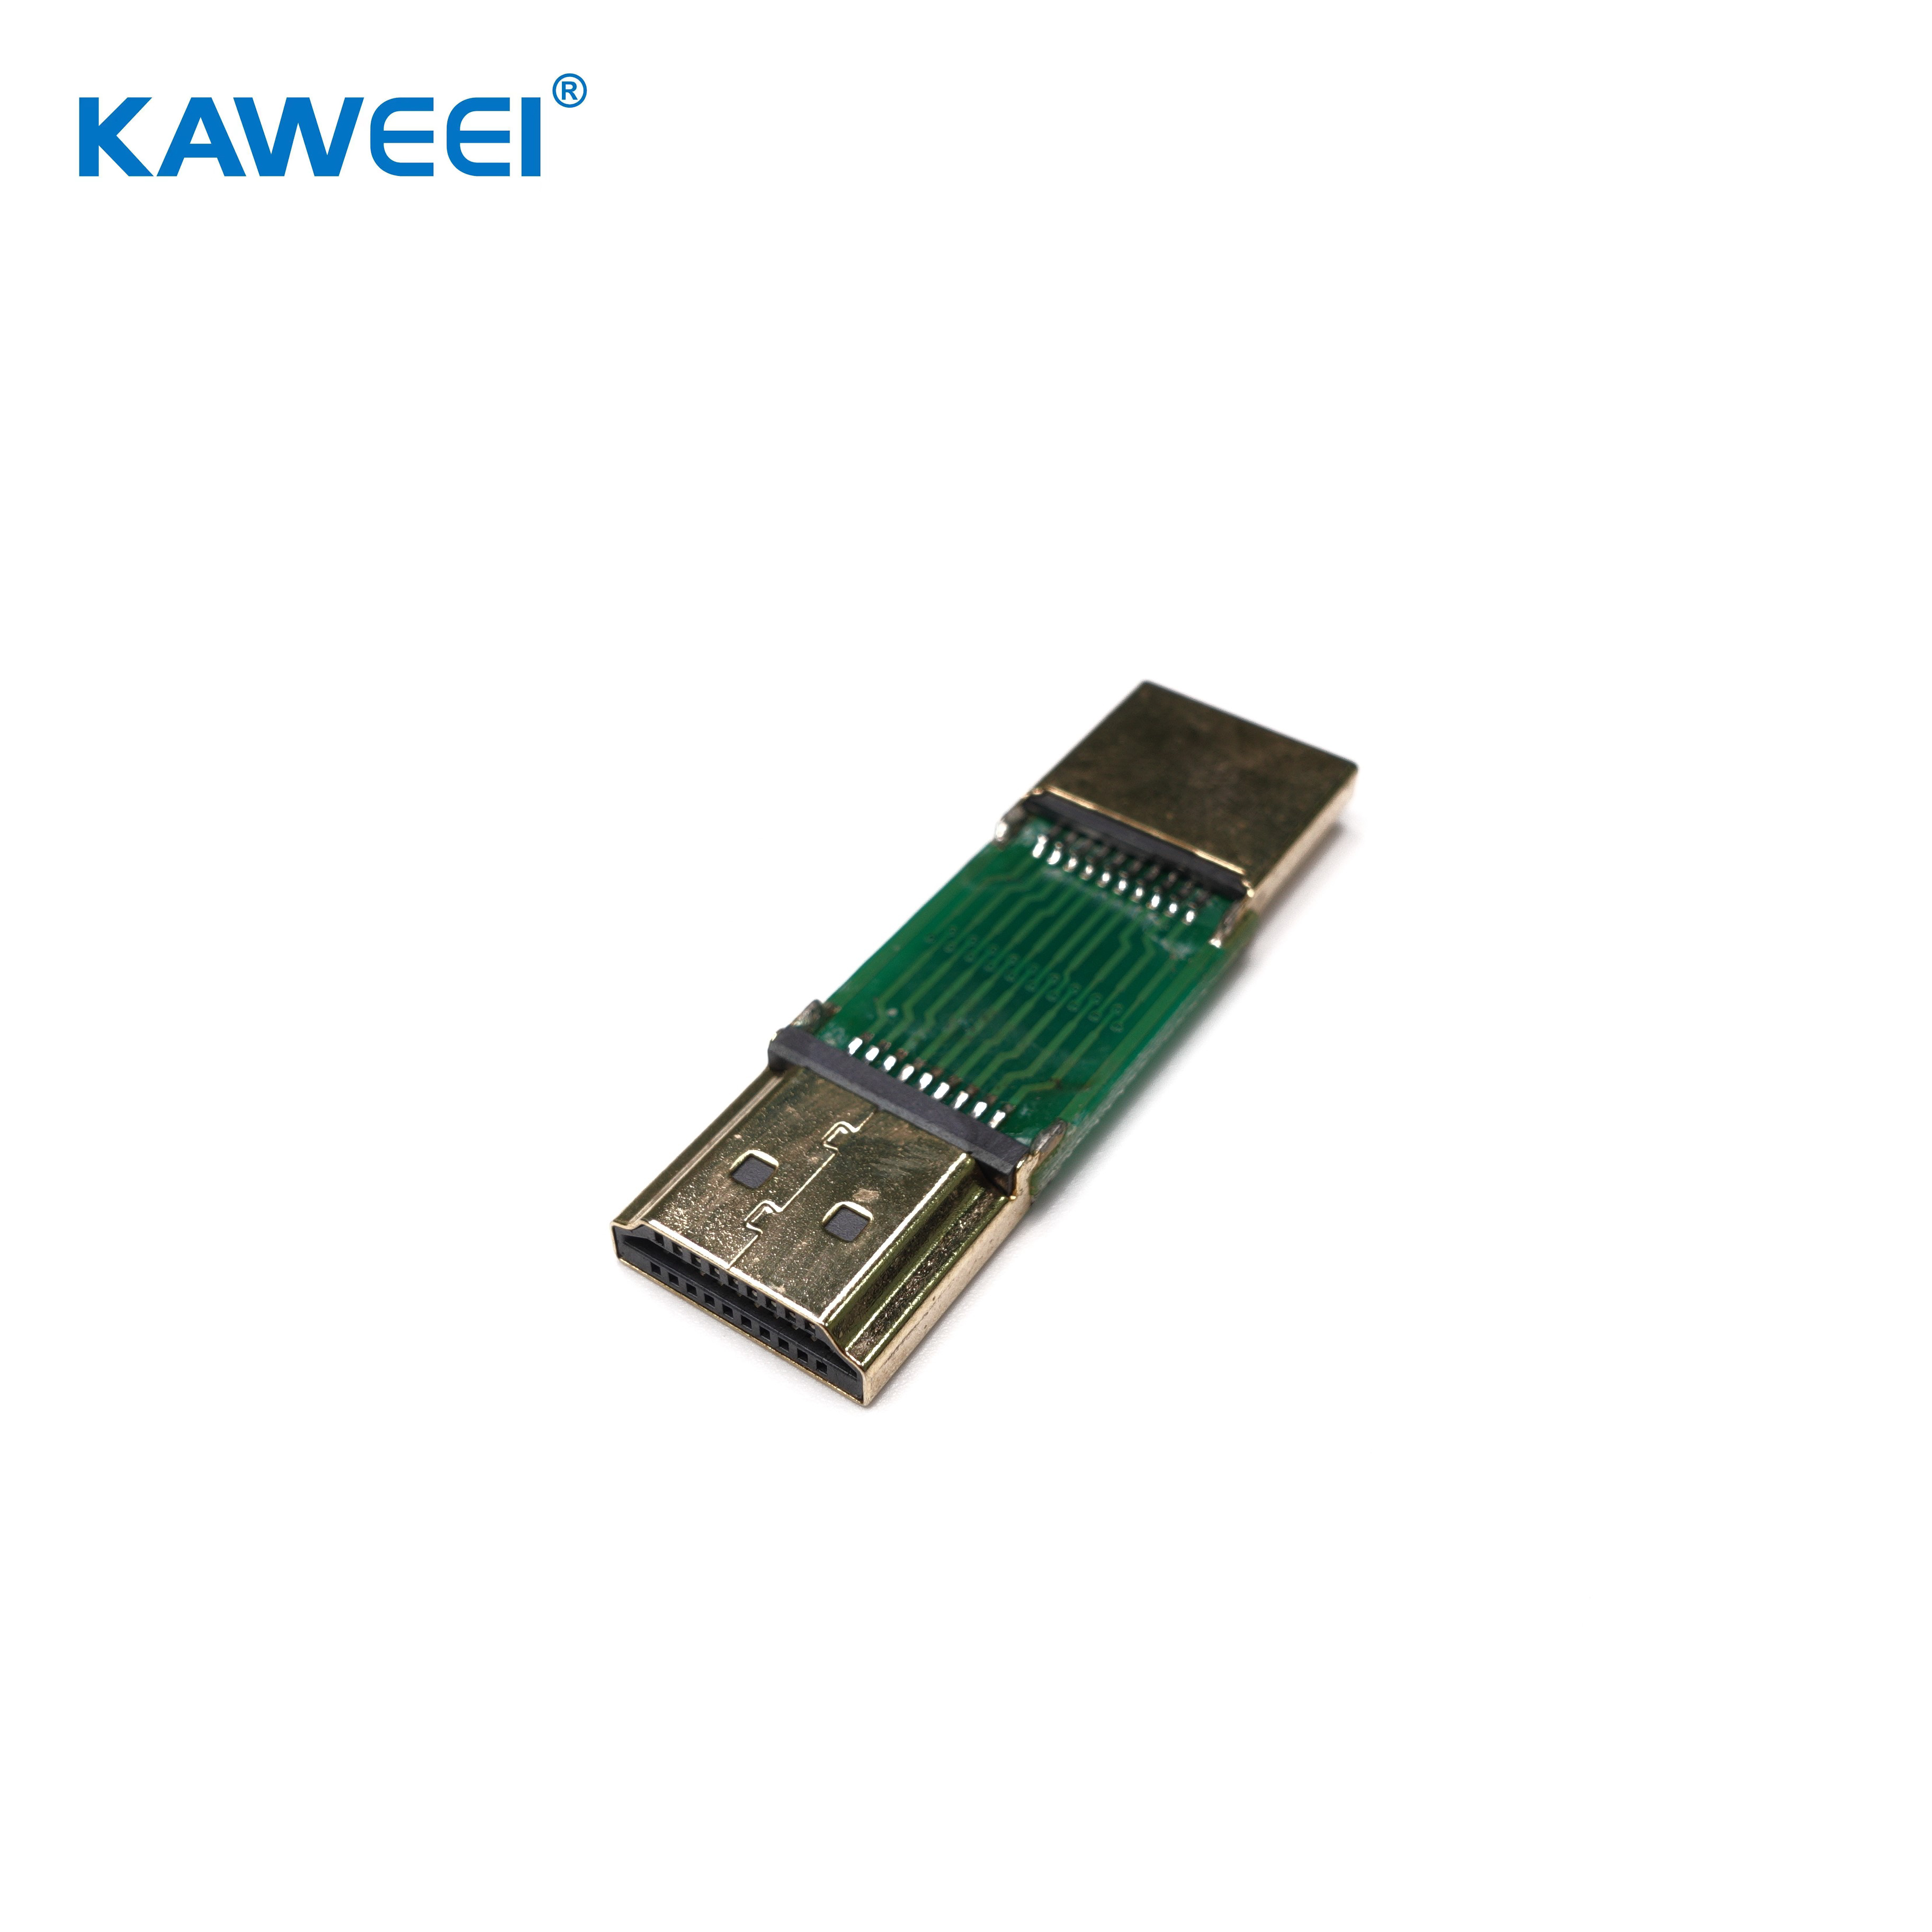 HDMI A vīrišķais 19 kontaktu plates savienotājs I/O savienotājs PCB savienotājs